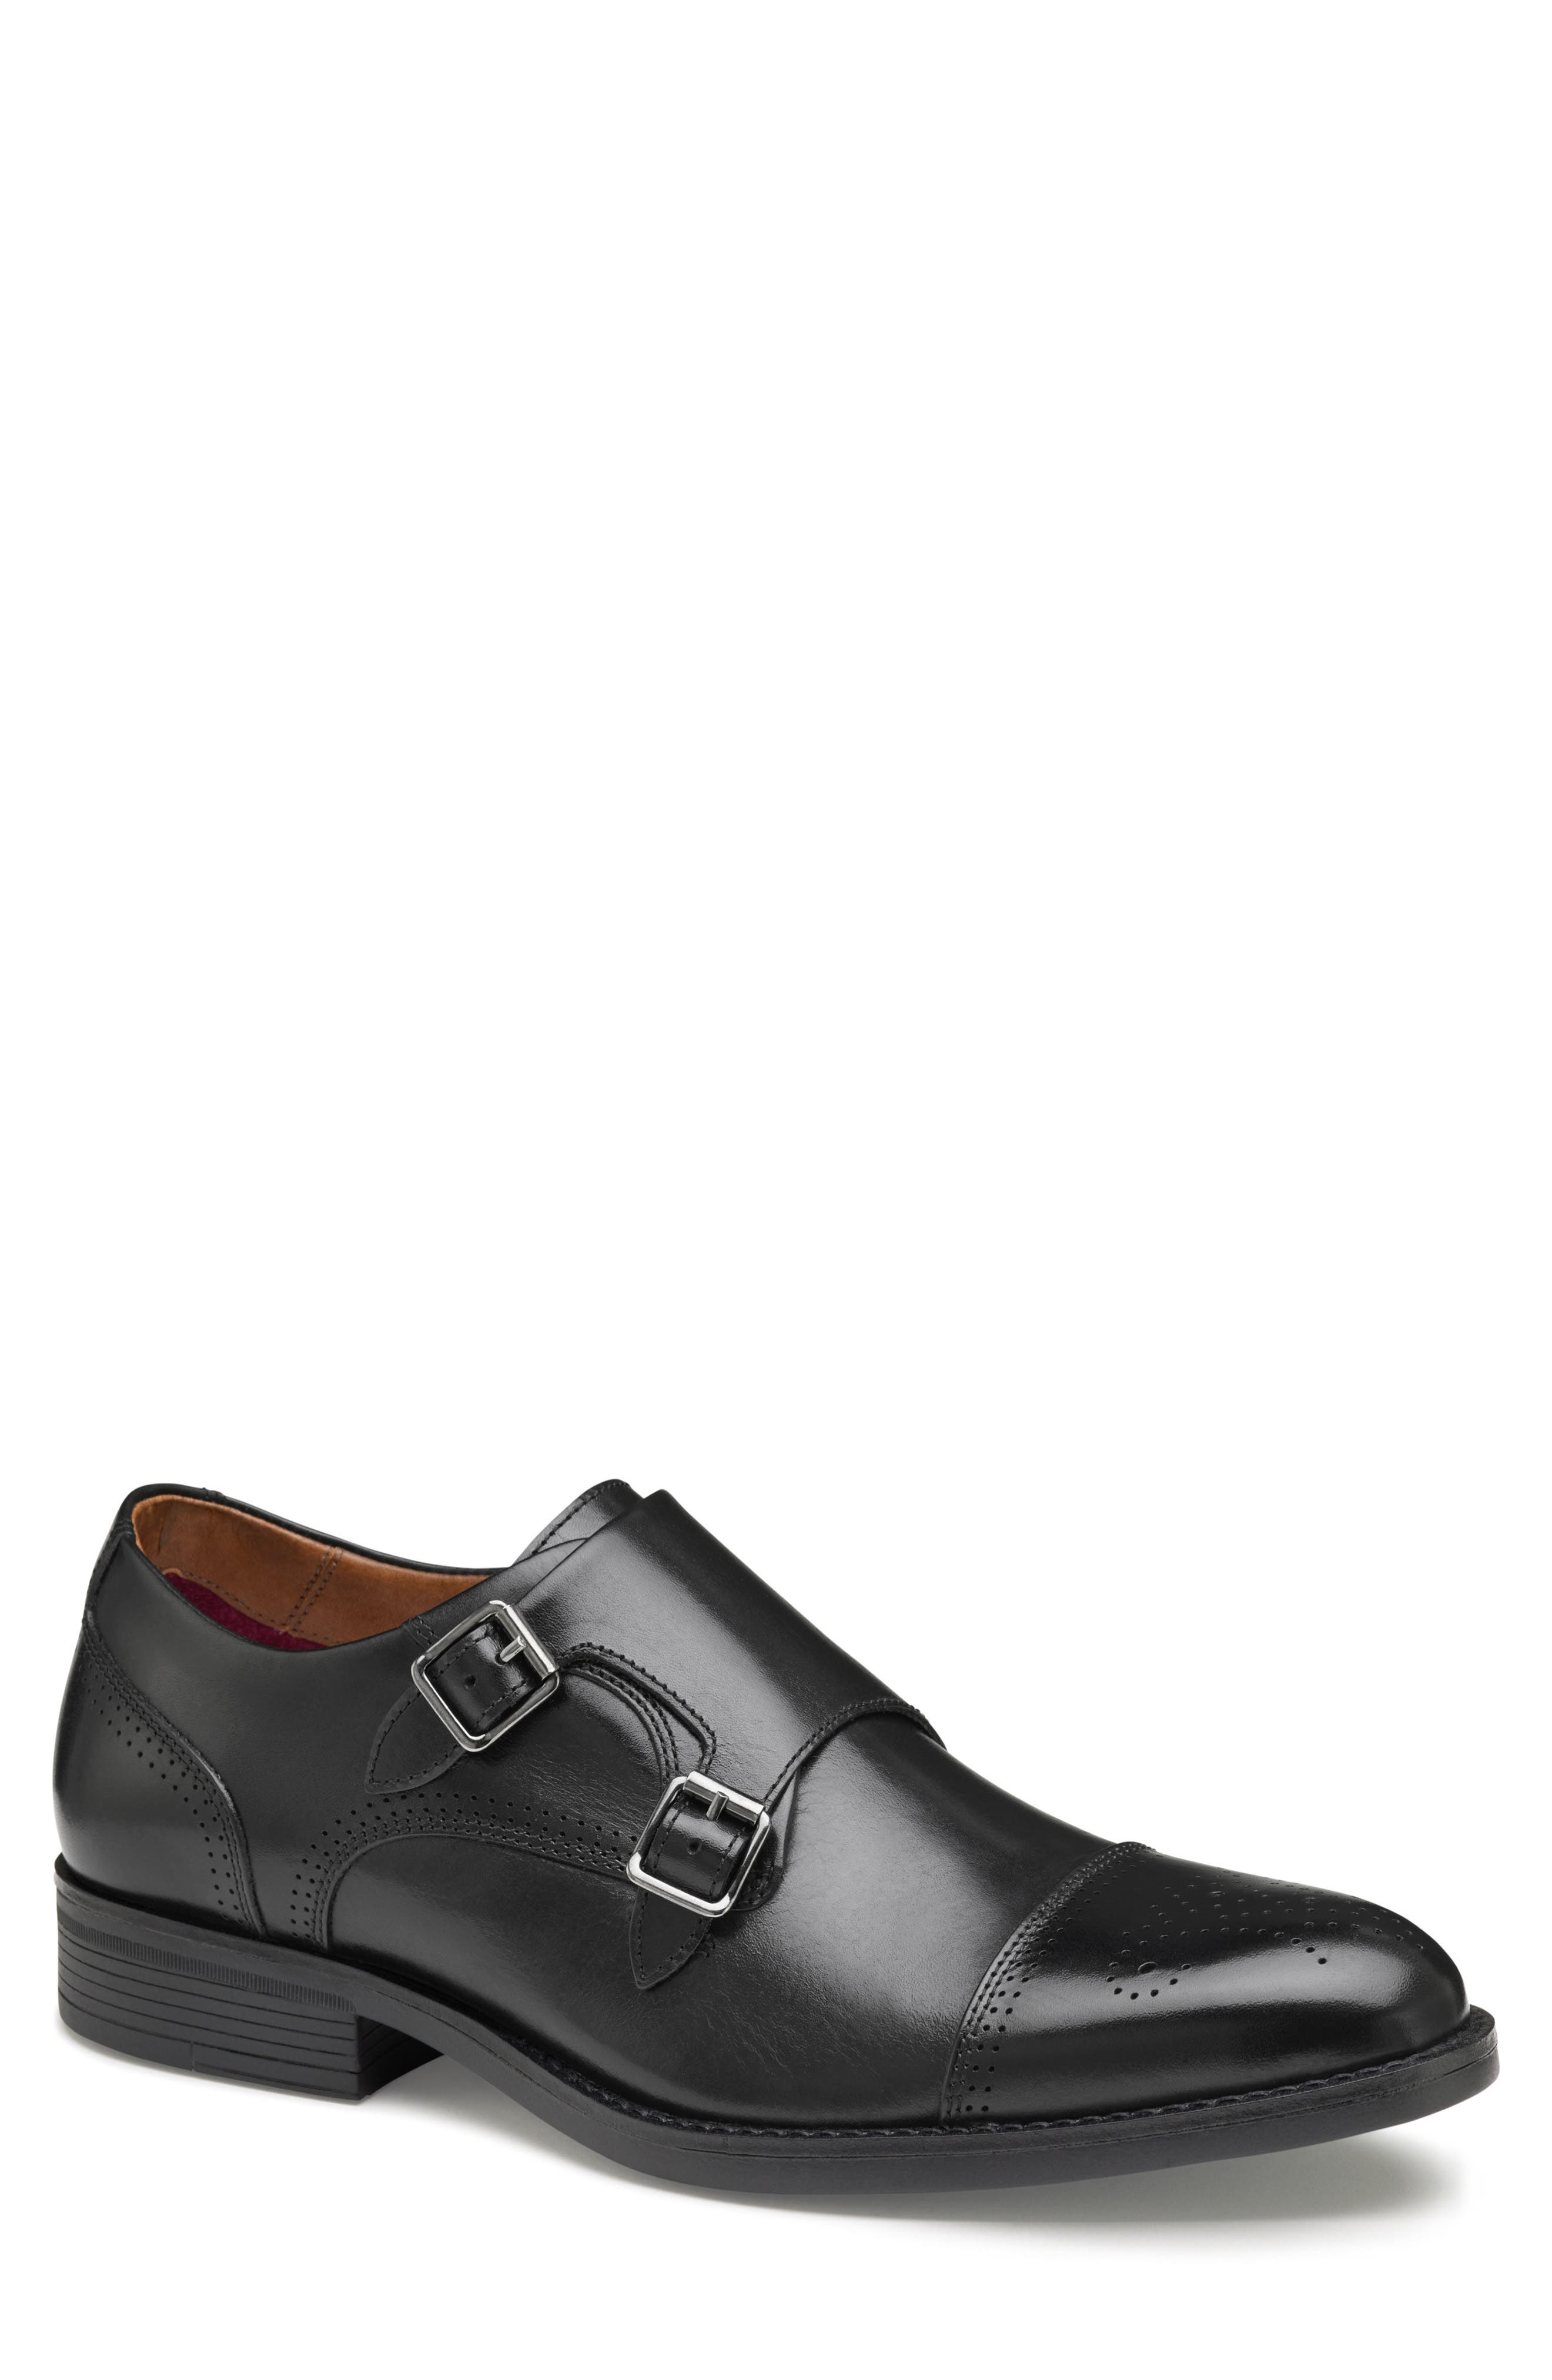 Details about   204871 PF50 Men's Shoes Size 13 M Black Leather Lace Up Johnston & Murphy 